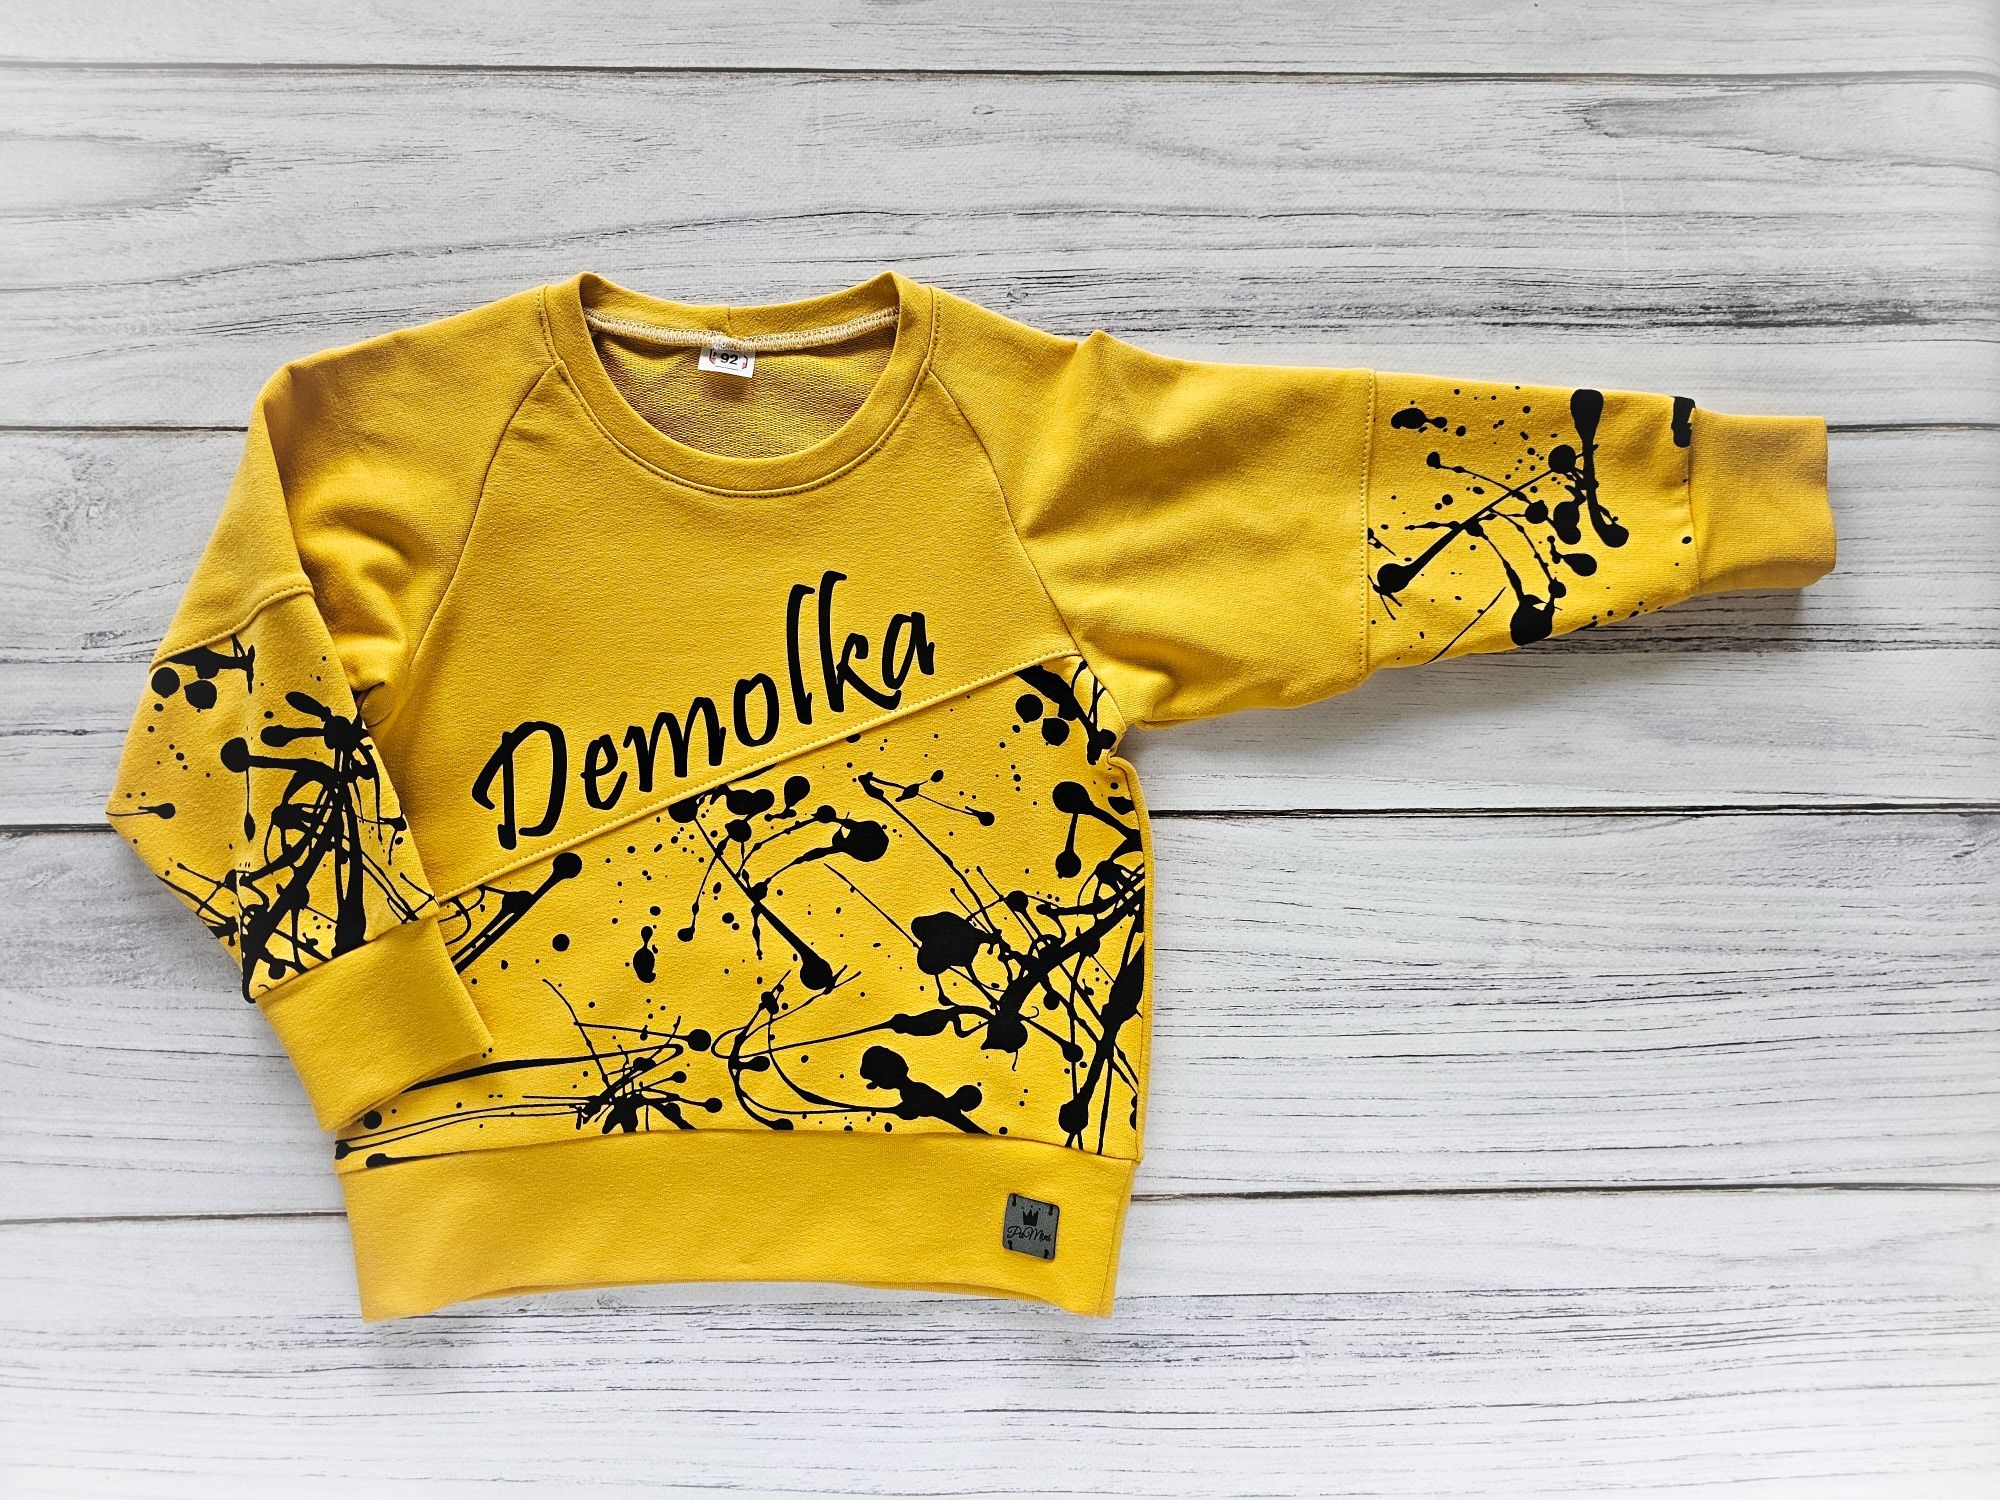 Bluza Demolka rozmiar 92 handmade